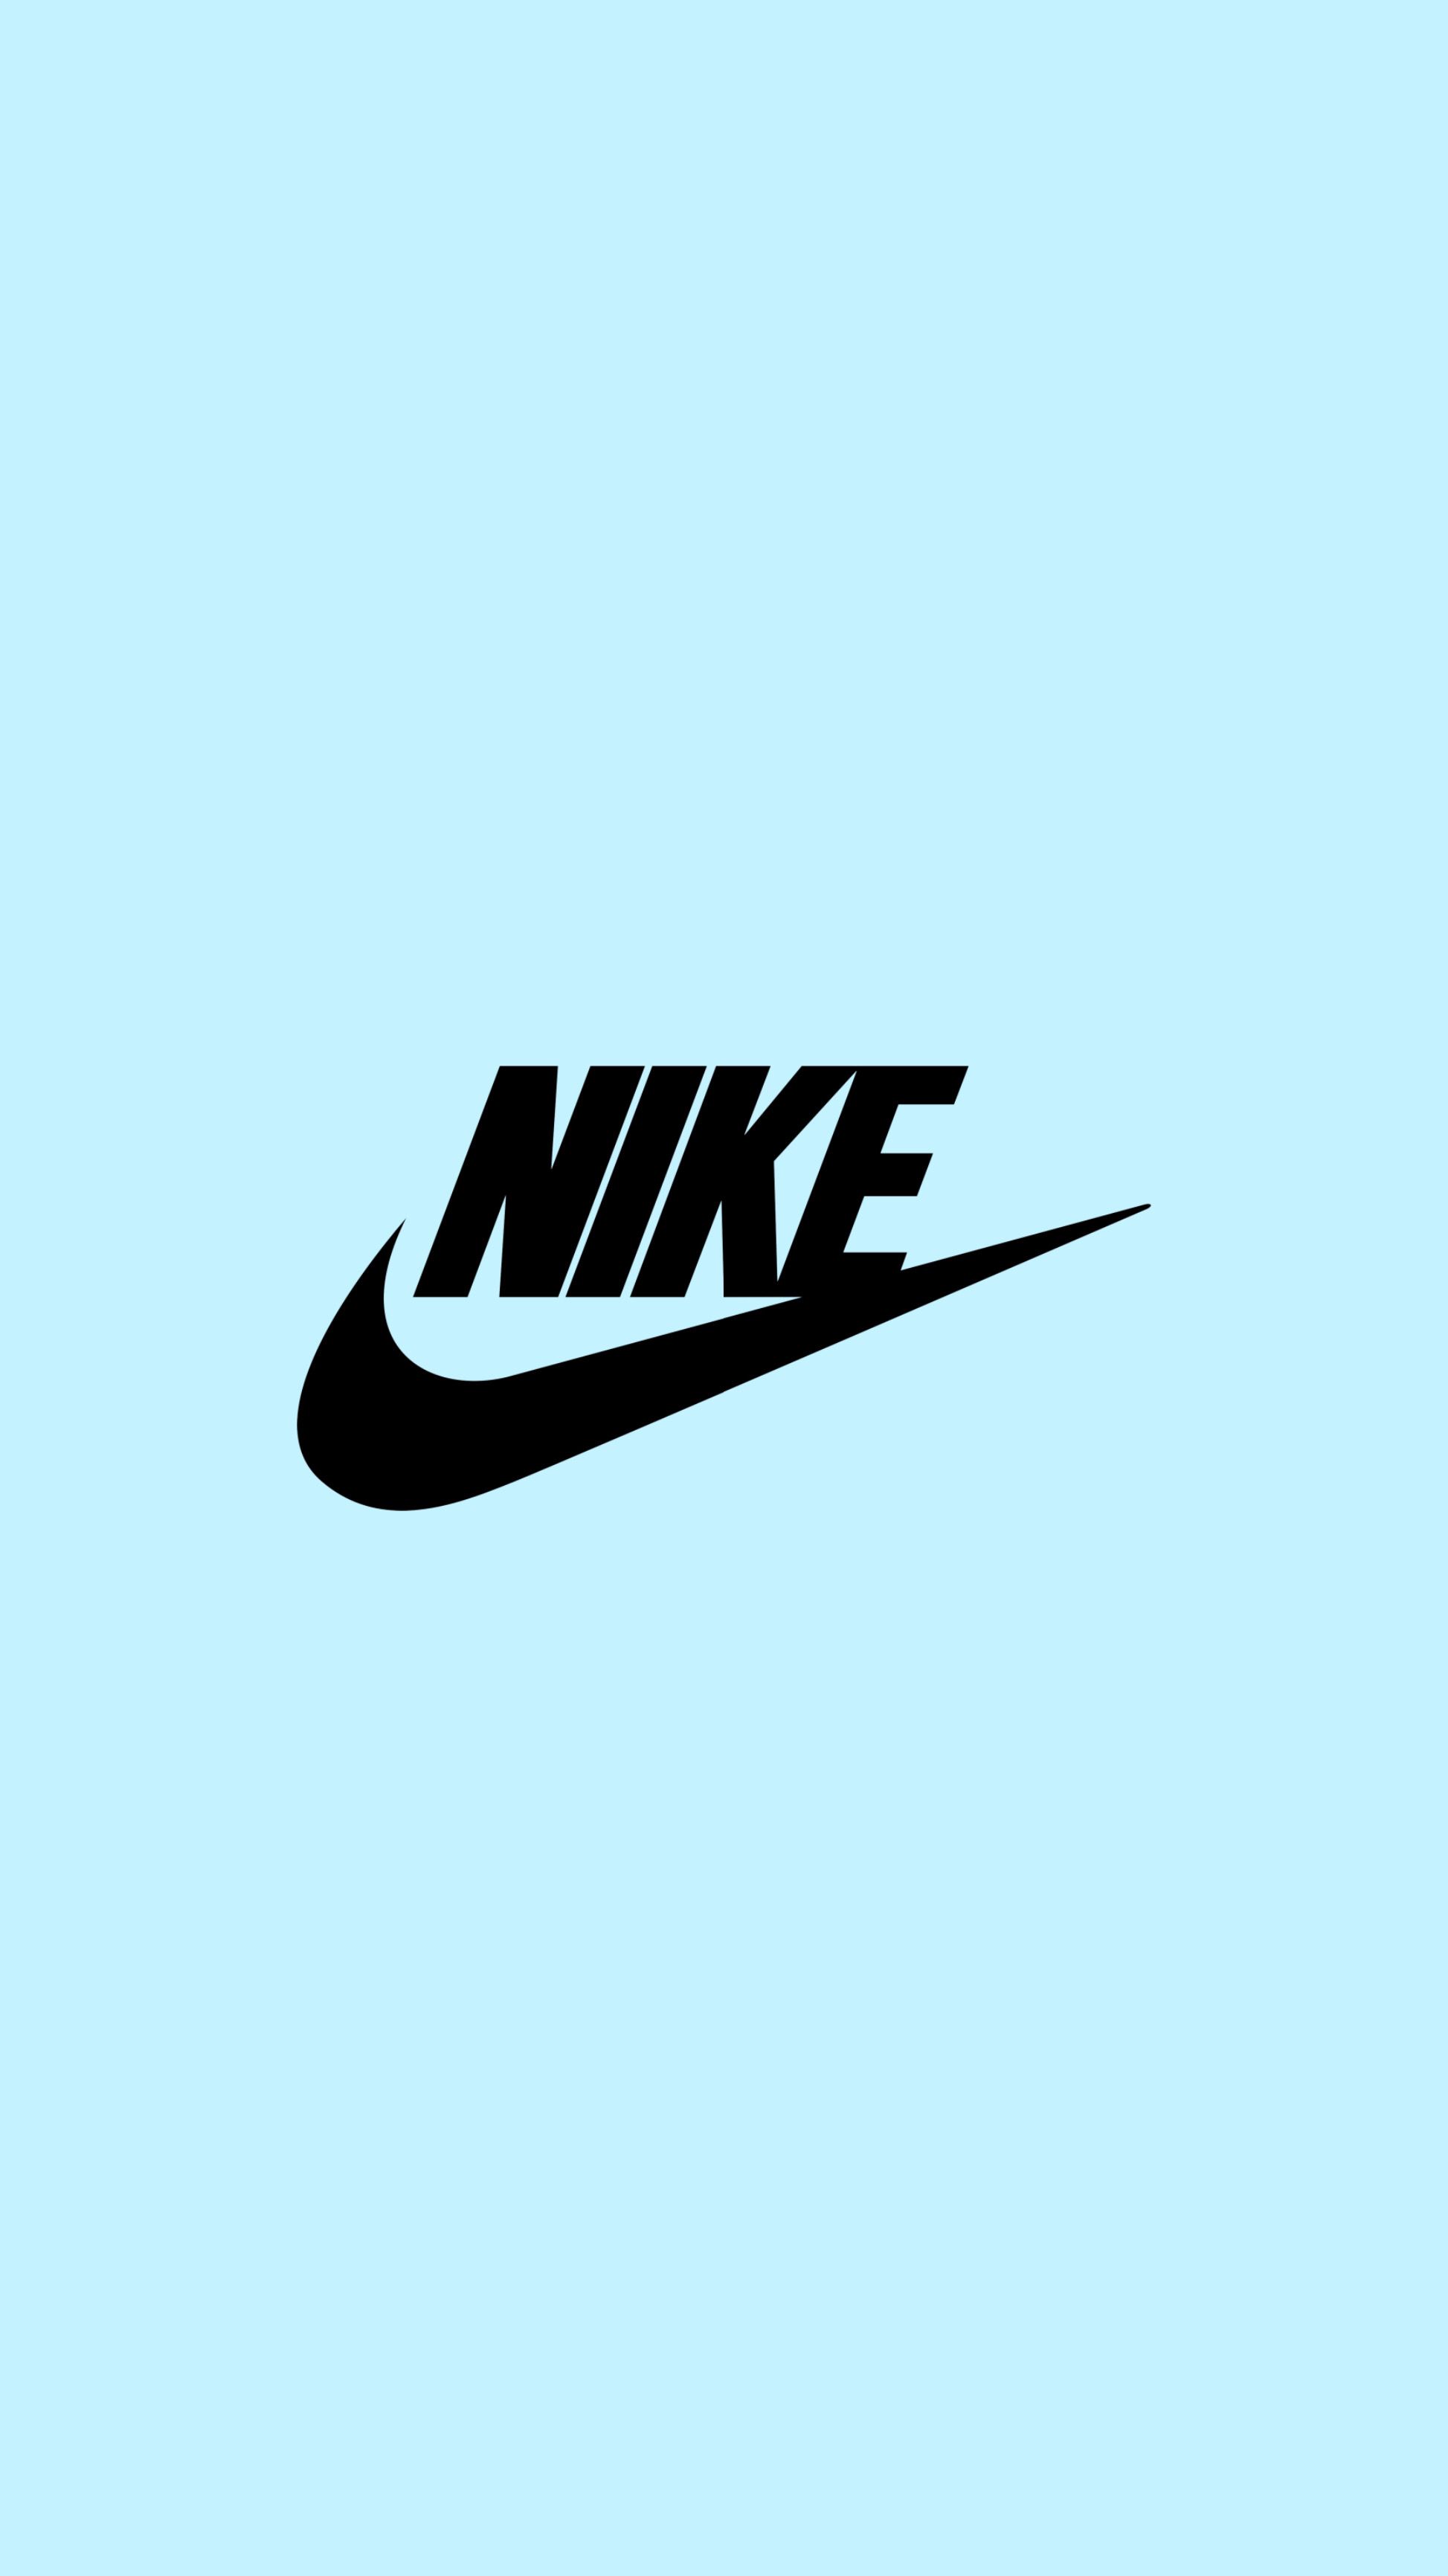 A black and white nike logo on blue background - Nike